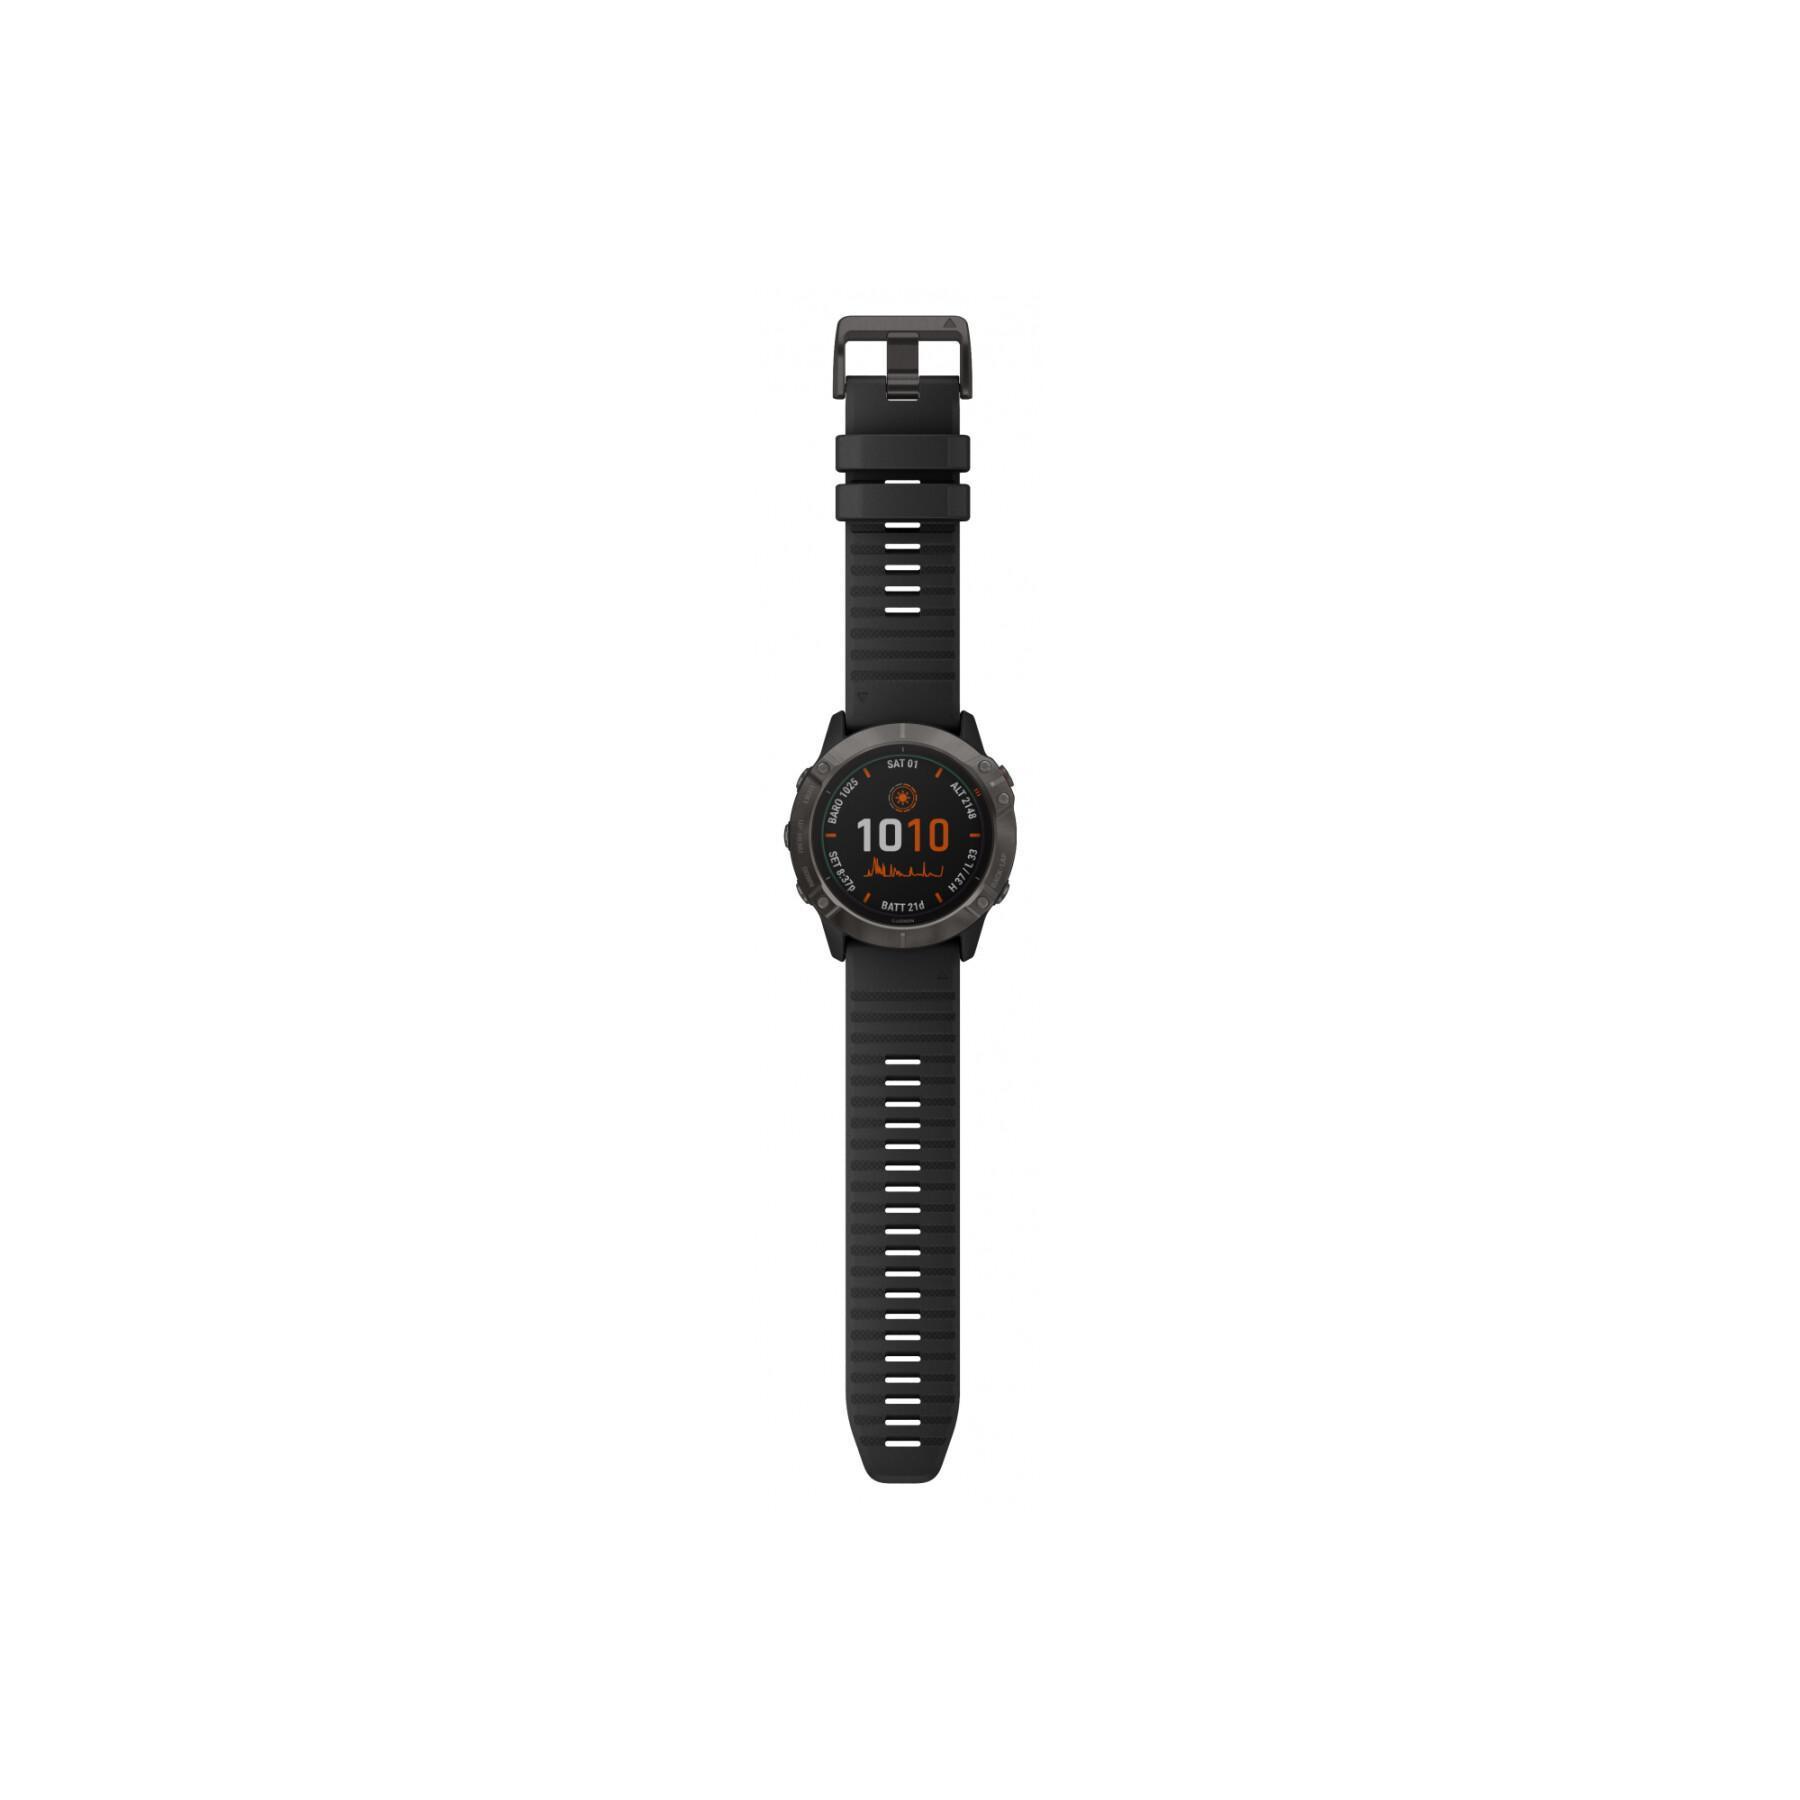 Garmin fēnix 6x pro solar watch